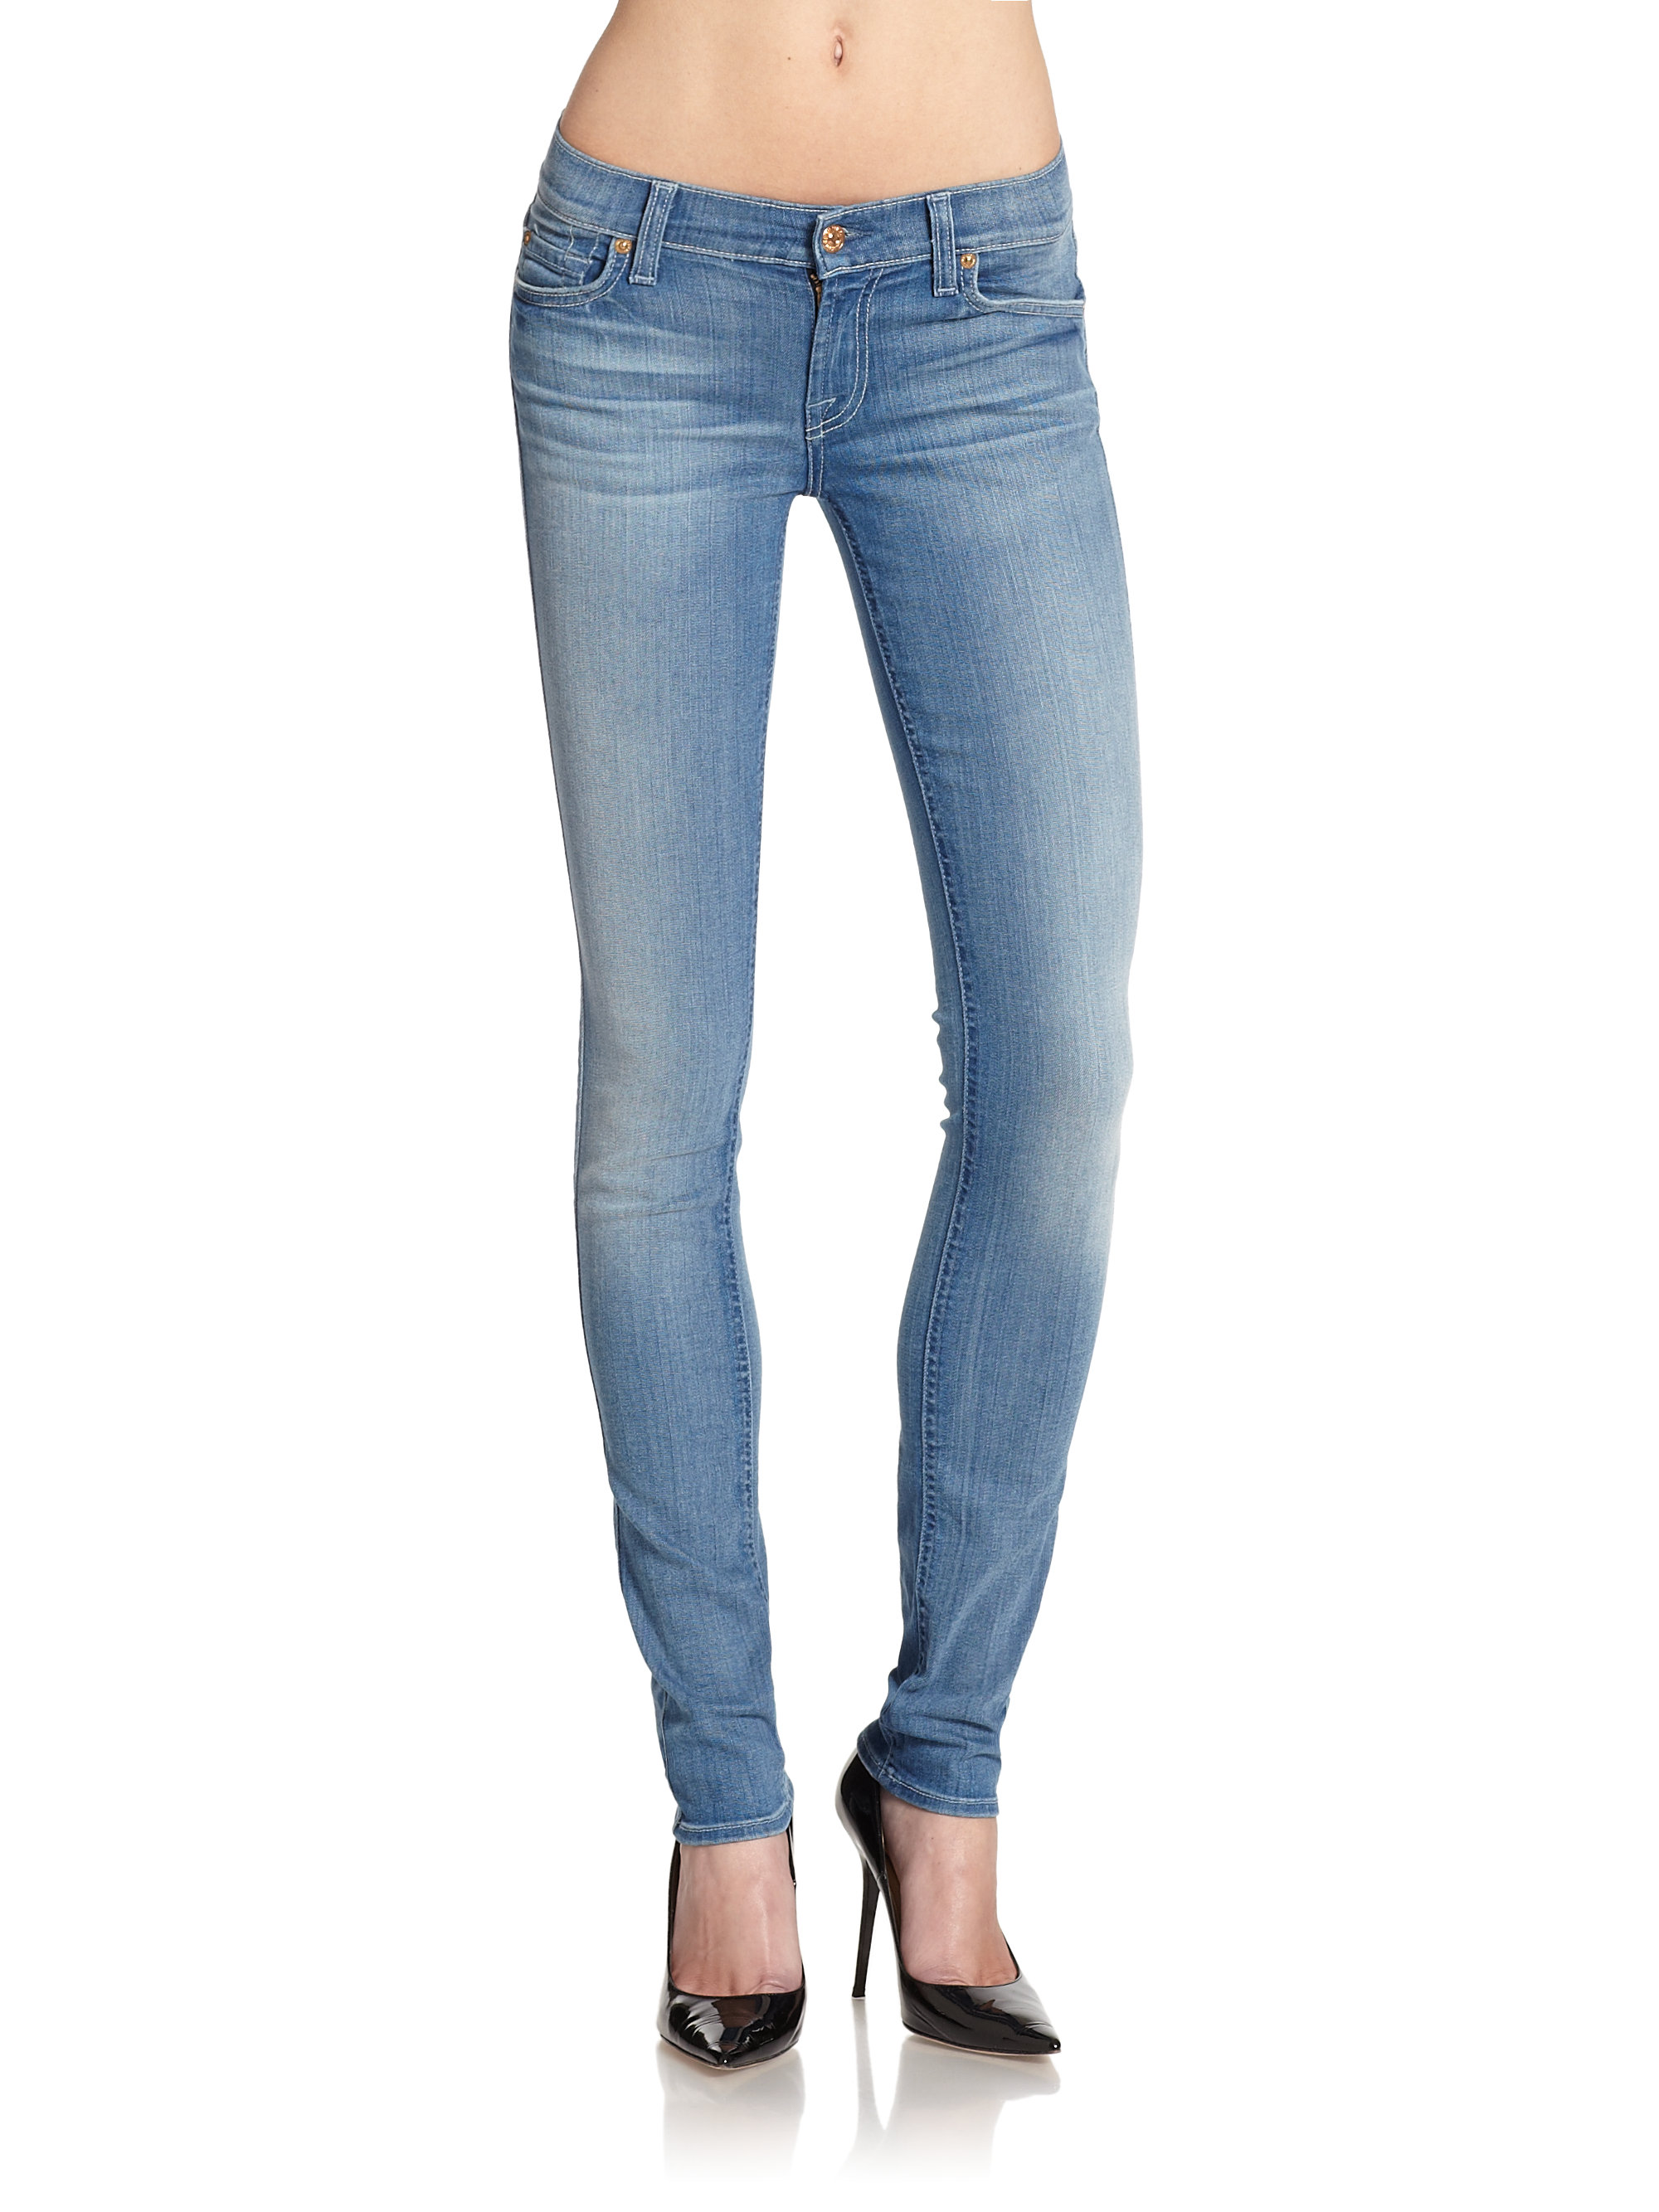 7 jeans roxanne,cheap - OFF 68% -vangvela.com